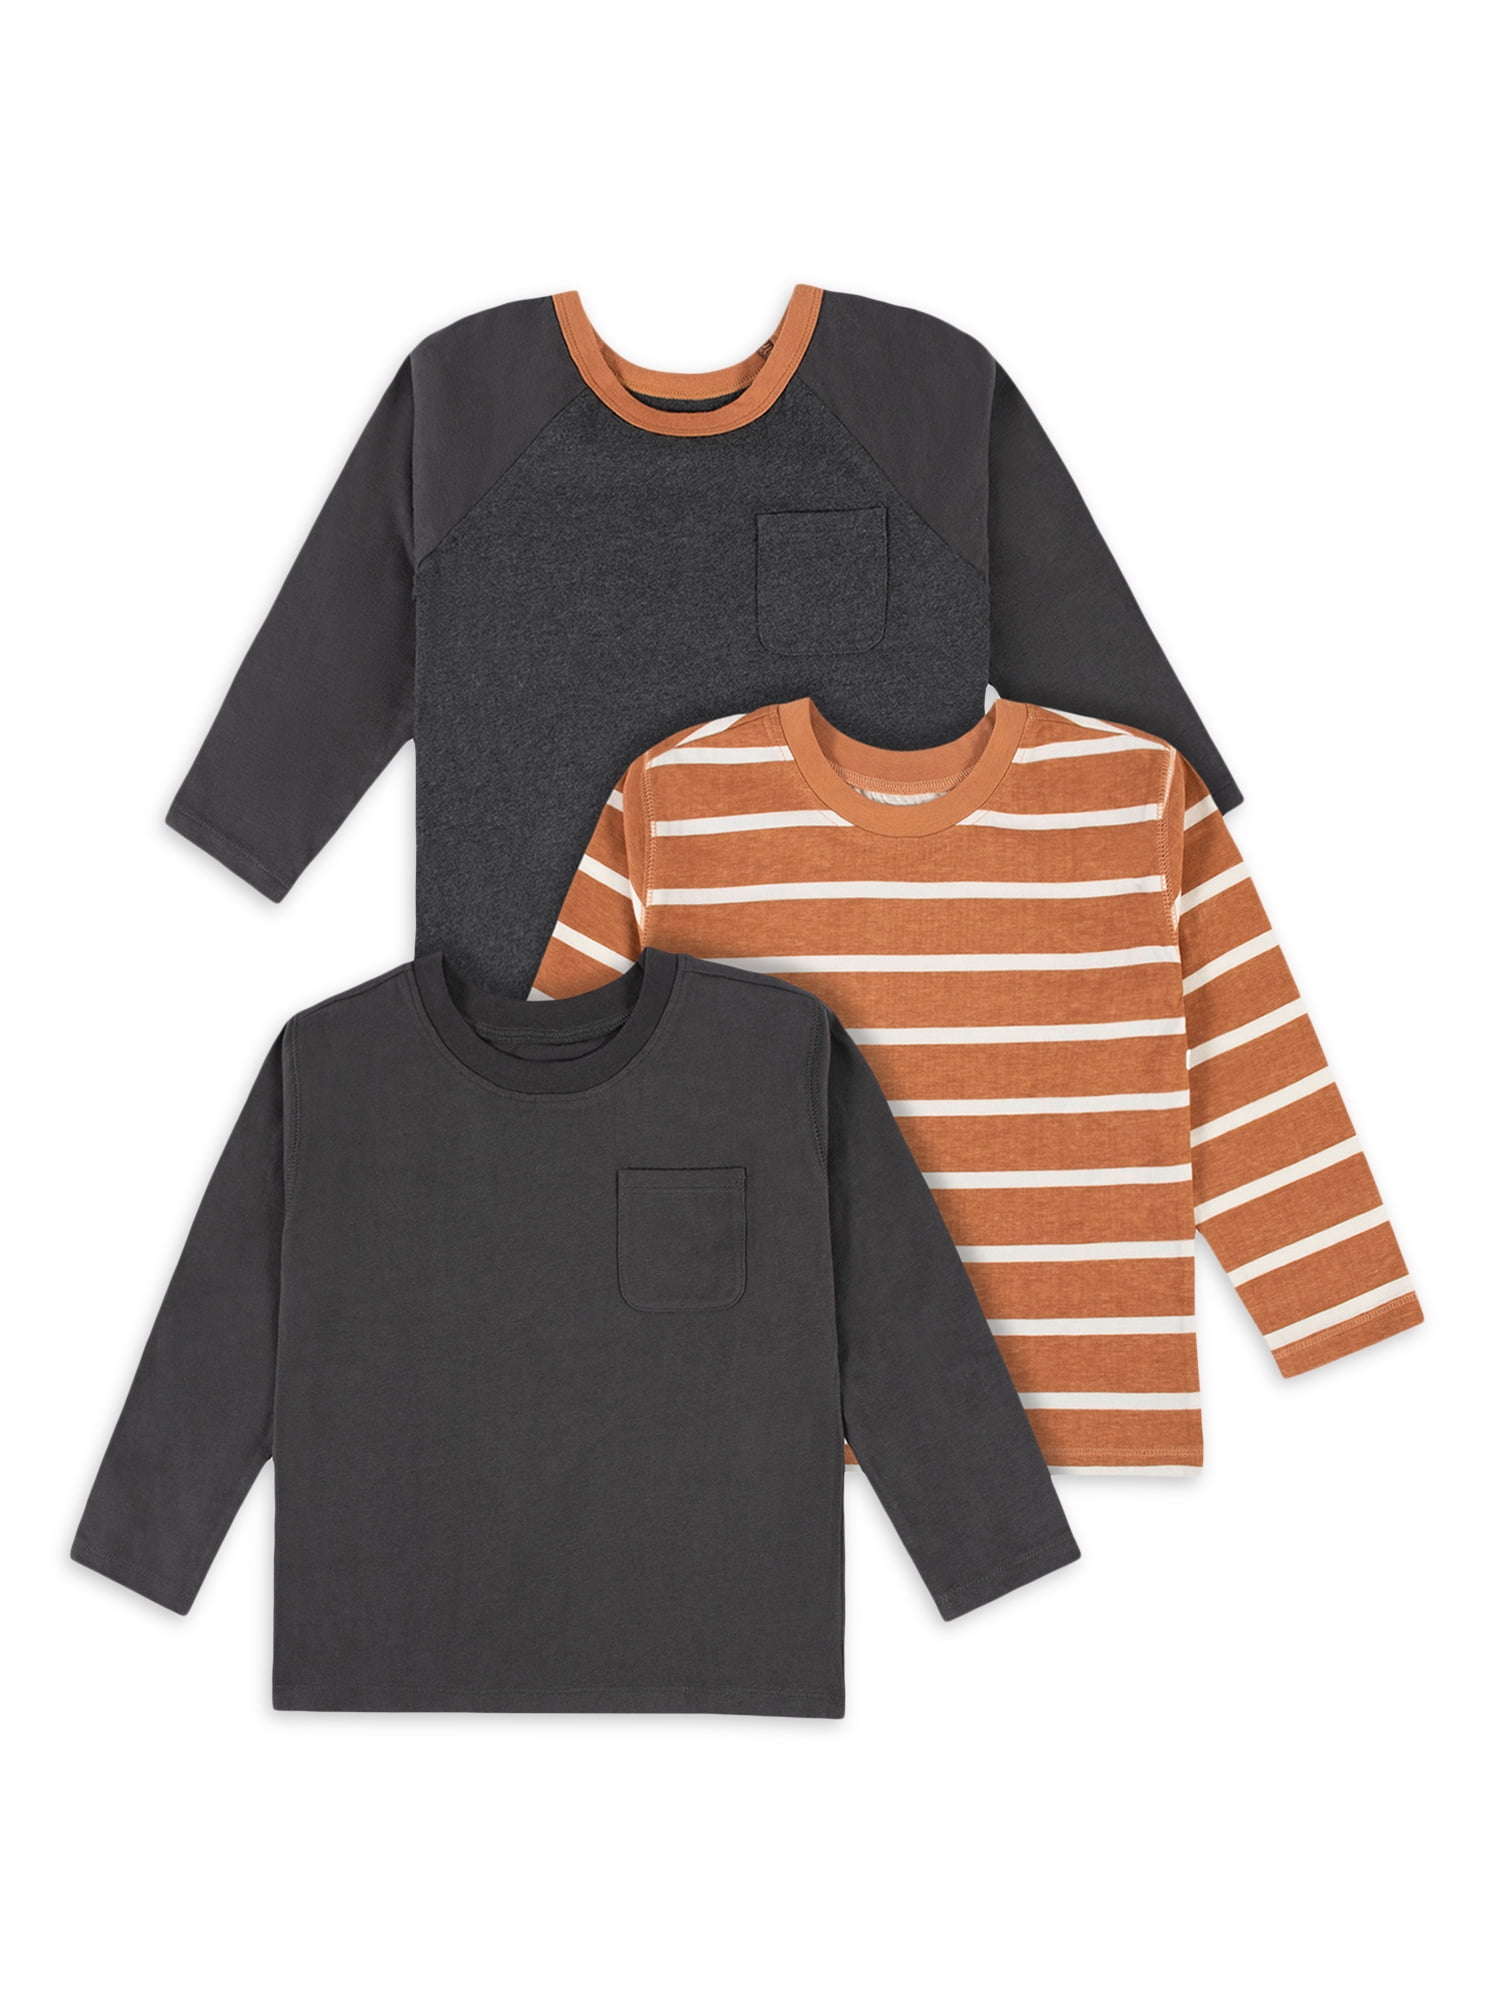 Boys Long Sleeve Tops Tee Shirt Cotton Casual Warm Graphic Dino Cartoon T-Shirts Packs Set 